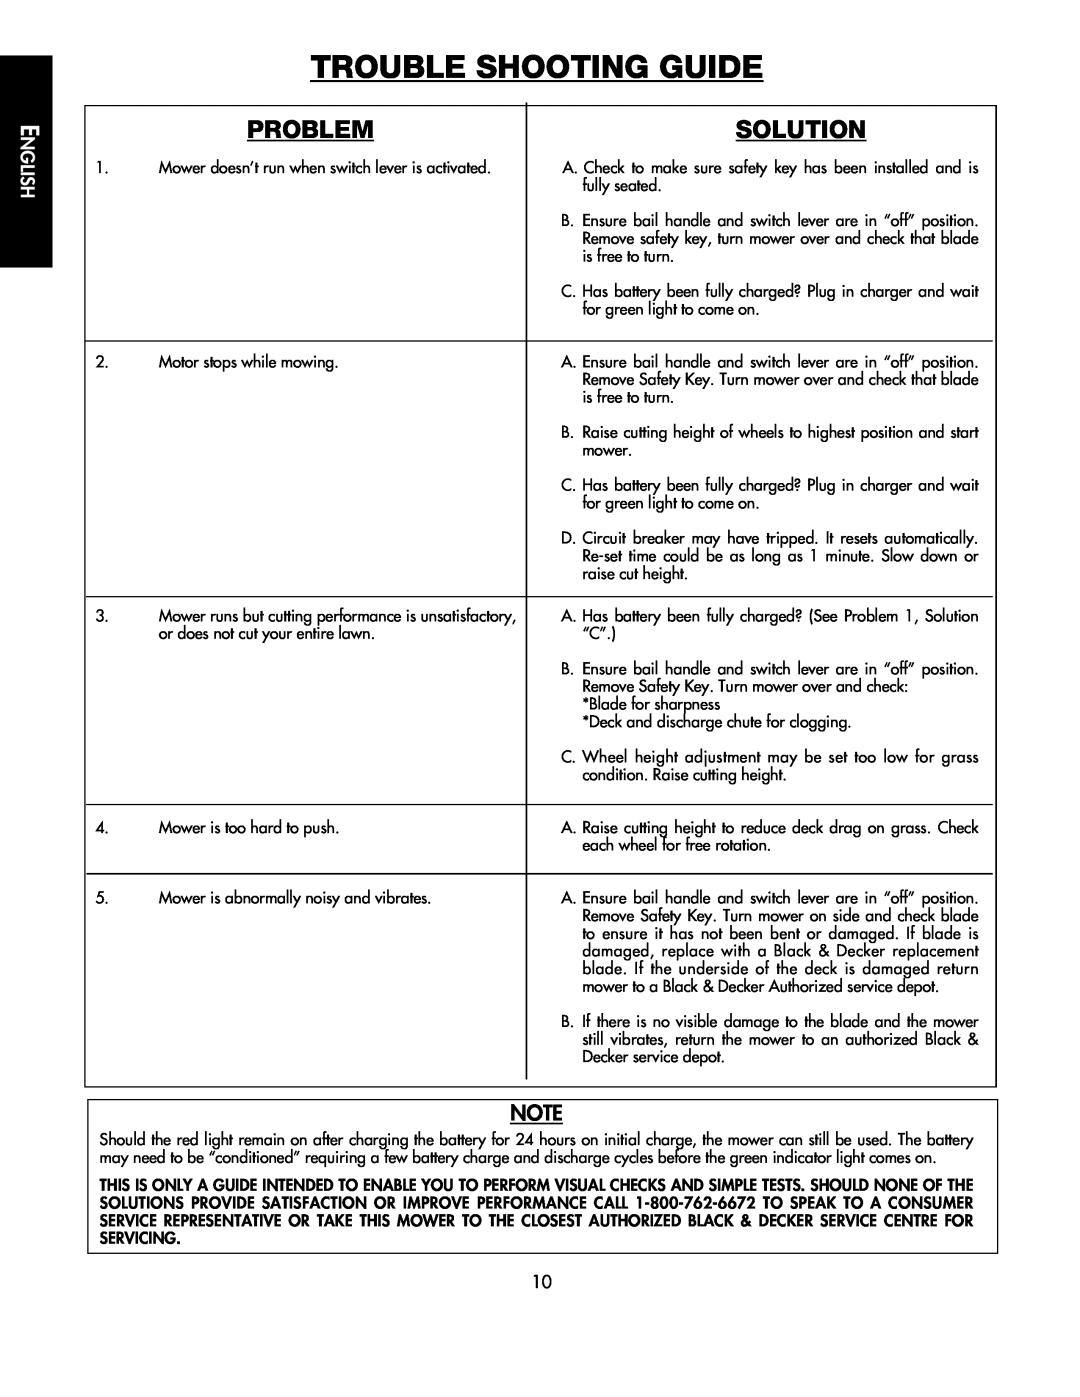 Black & Decker CMM1000 instruction manual Trouble Shooting Guide, Problem, Solution, English 